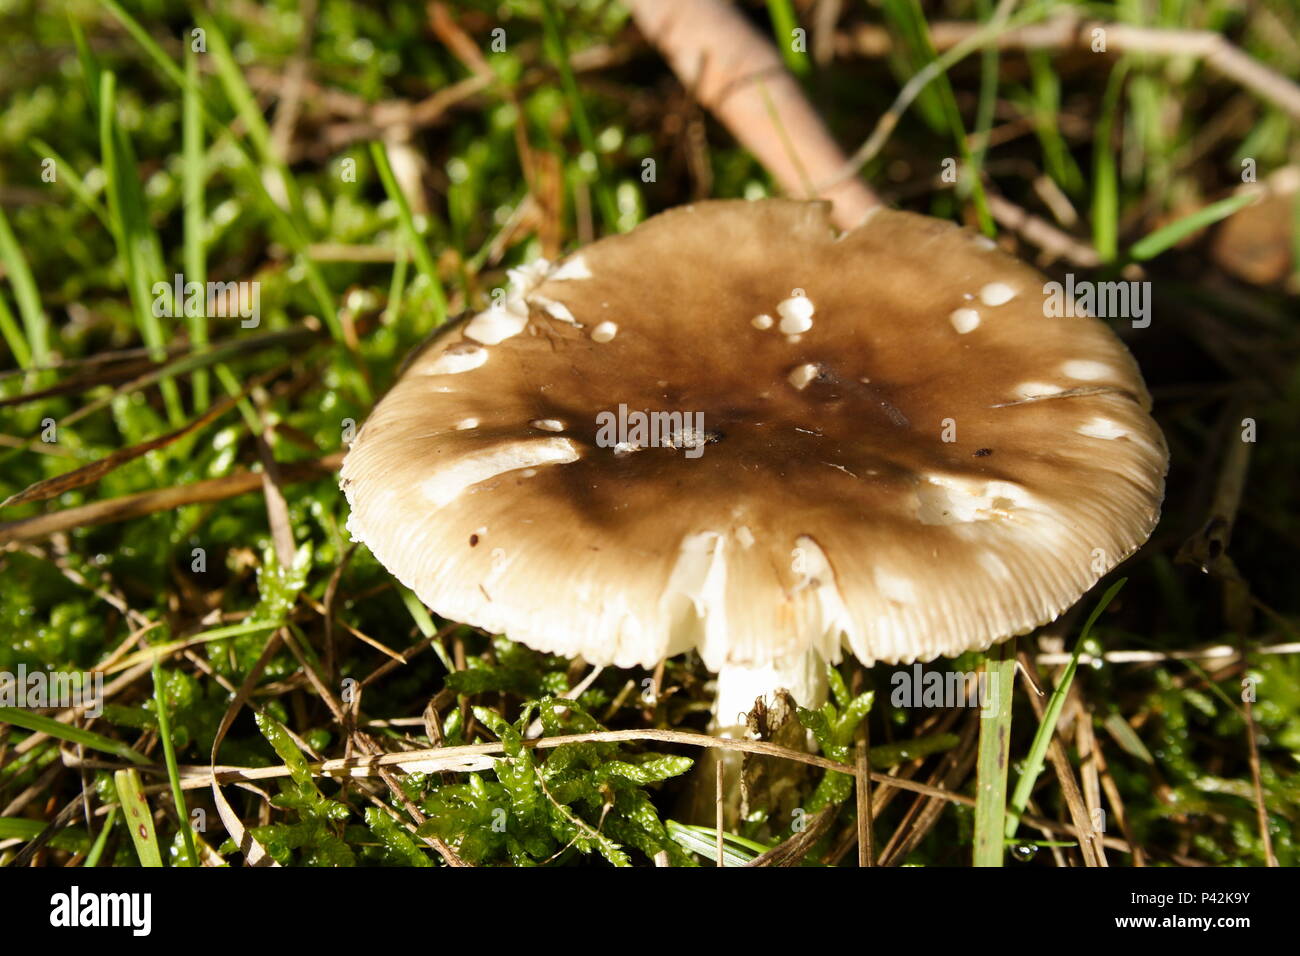 Wild Toadstool Mushroom in the afternoon sunlight Stock Photo